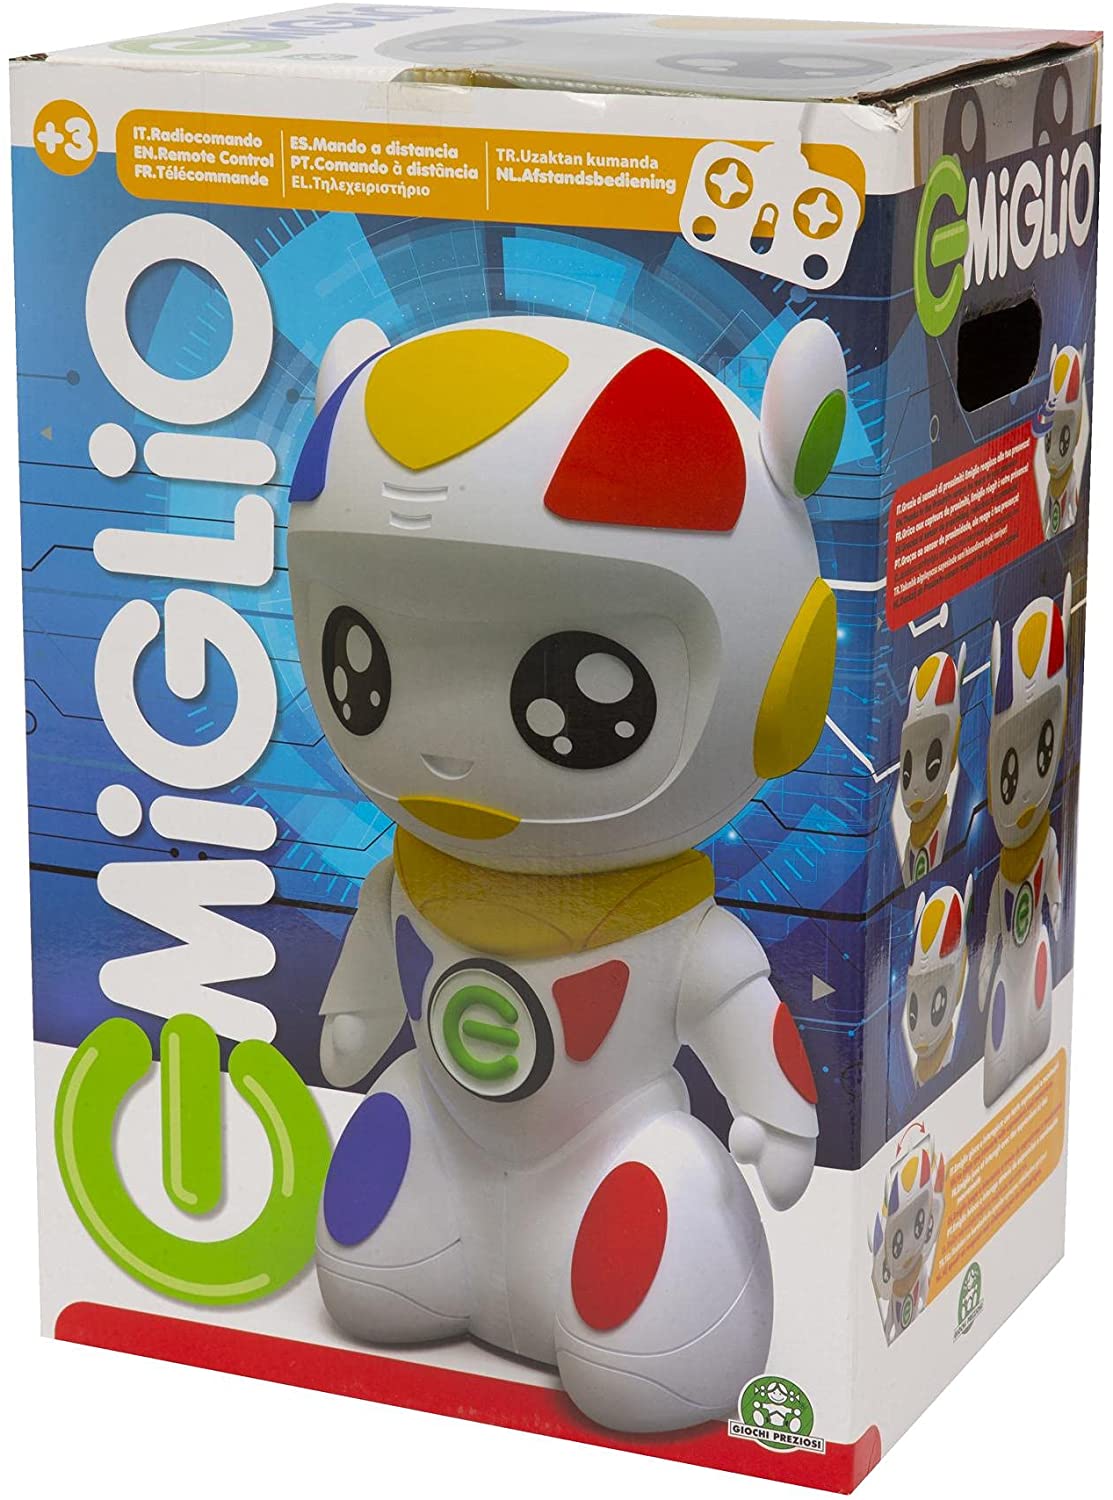 Emiglio Robot - Giochi preziosi -MGL00000